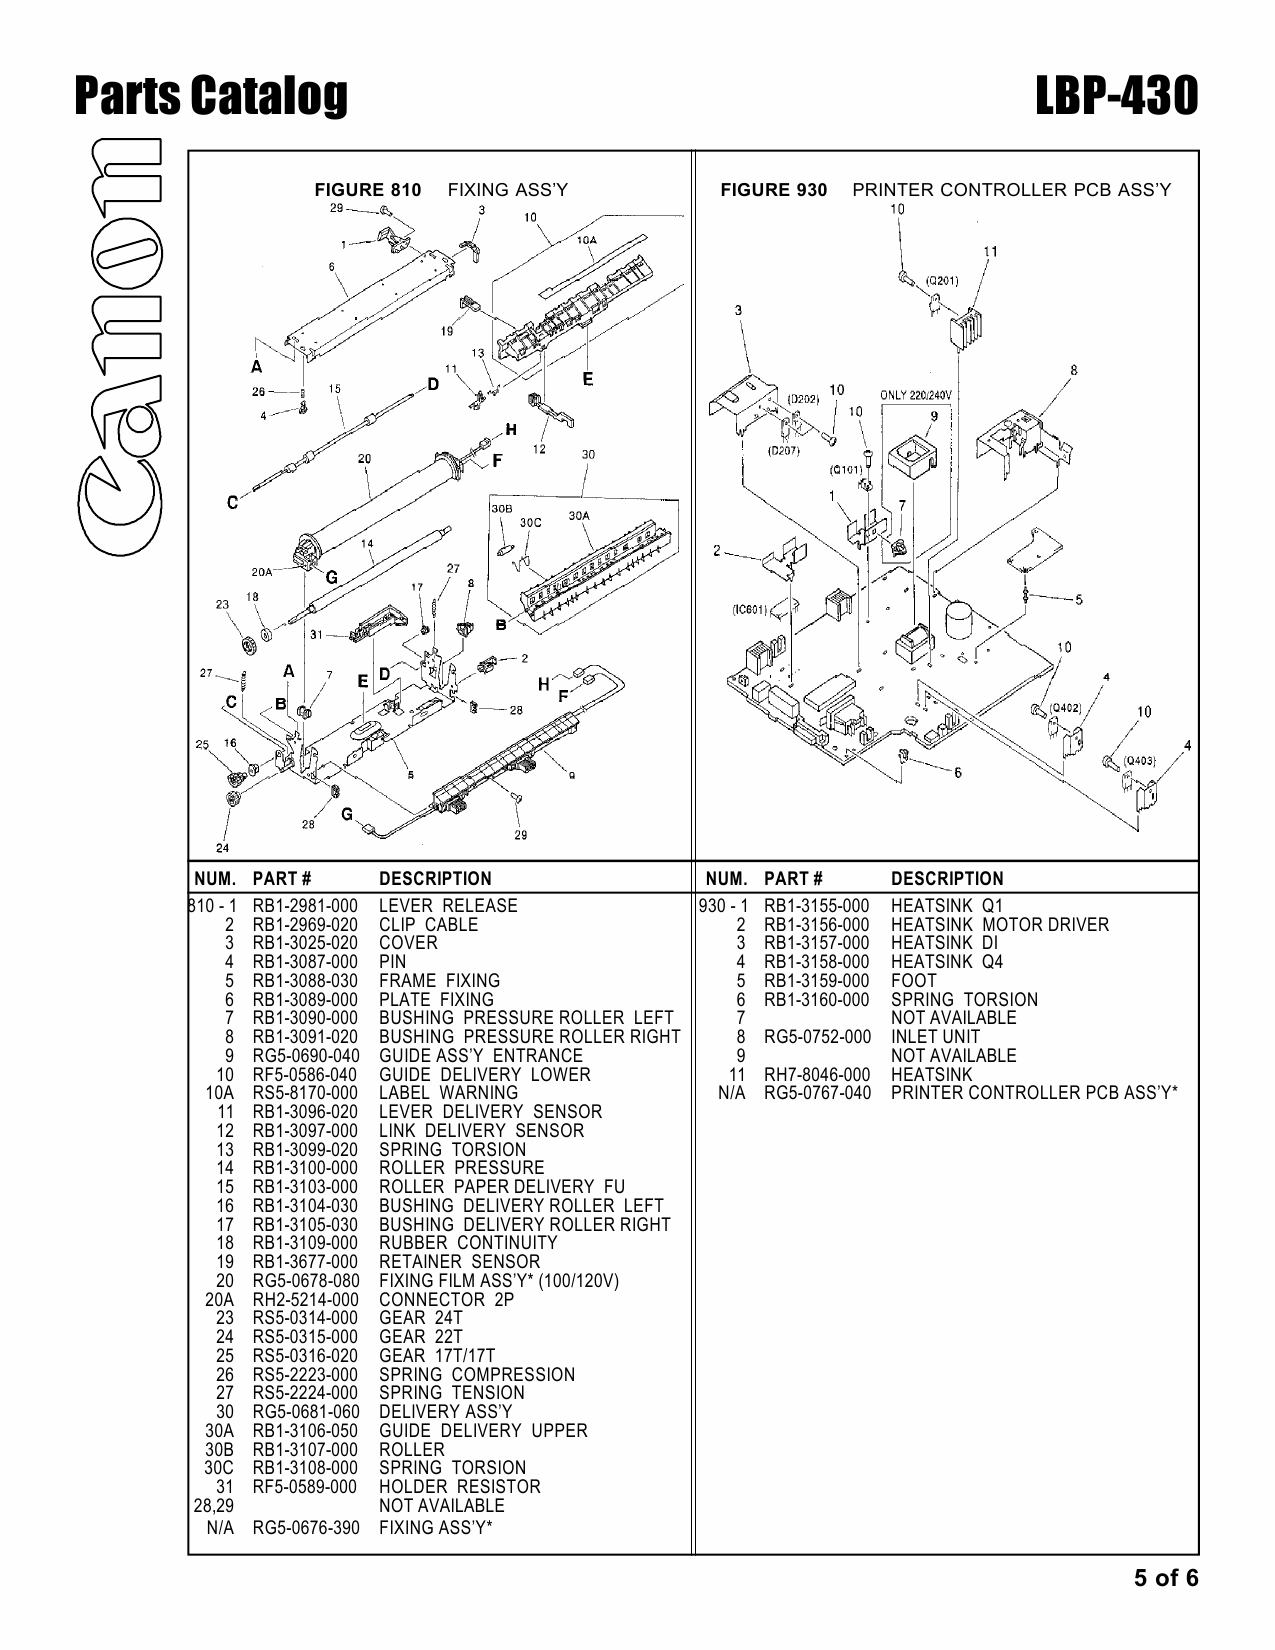 Canon imageCLASS LBP-430 Parts Catalog Manual-5